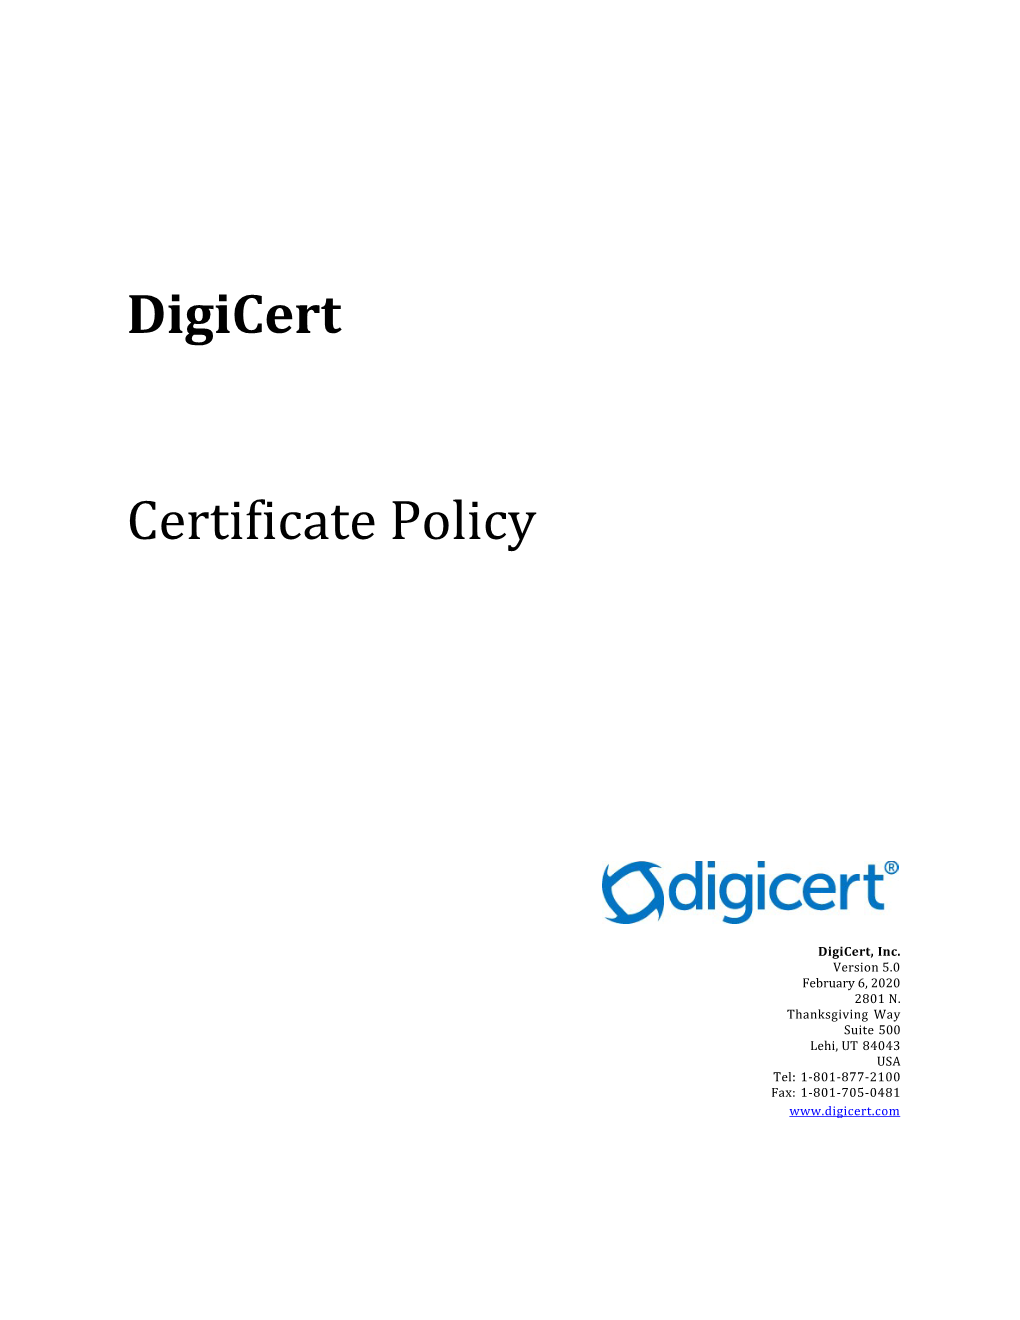 Digicert-Certificate-Policy-Version-5.0.Pdf